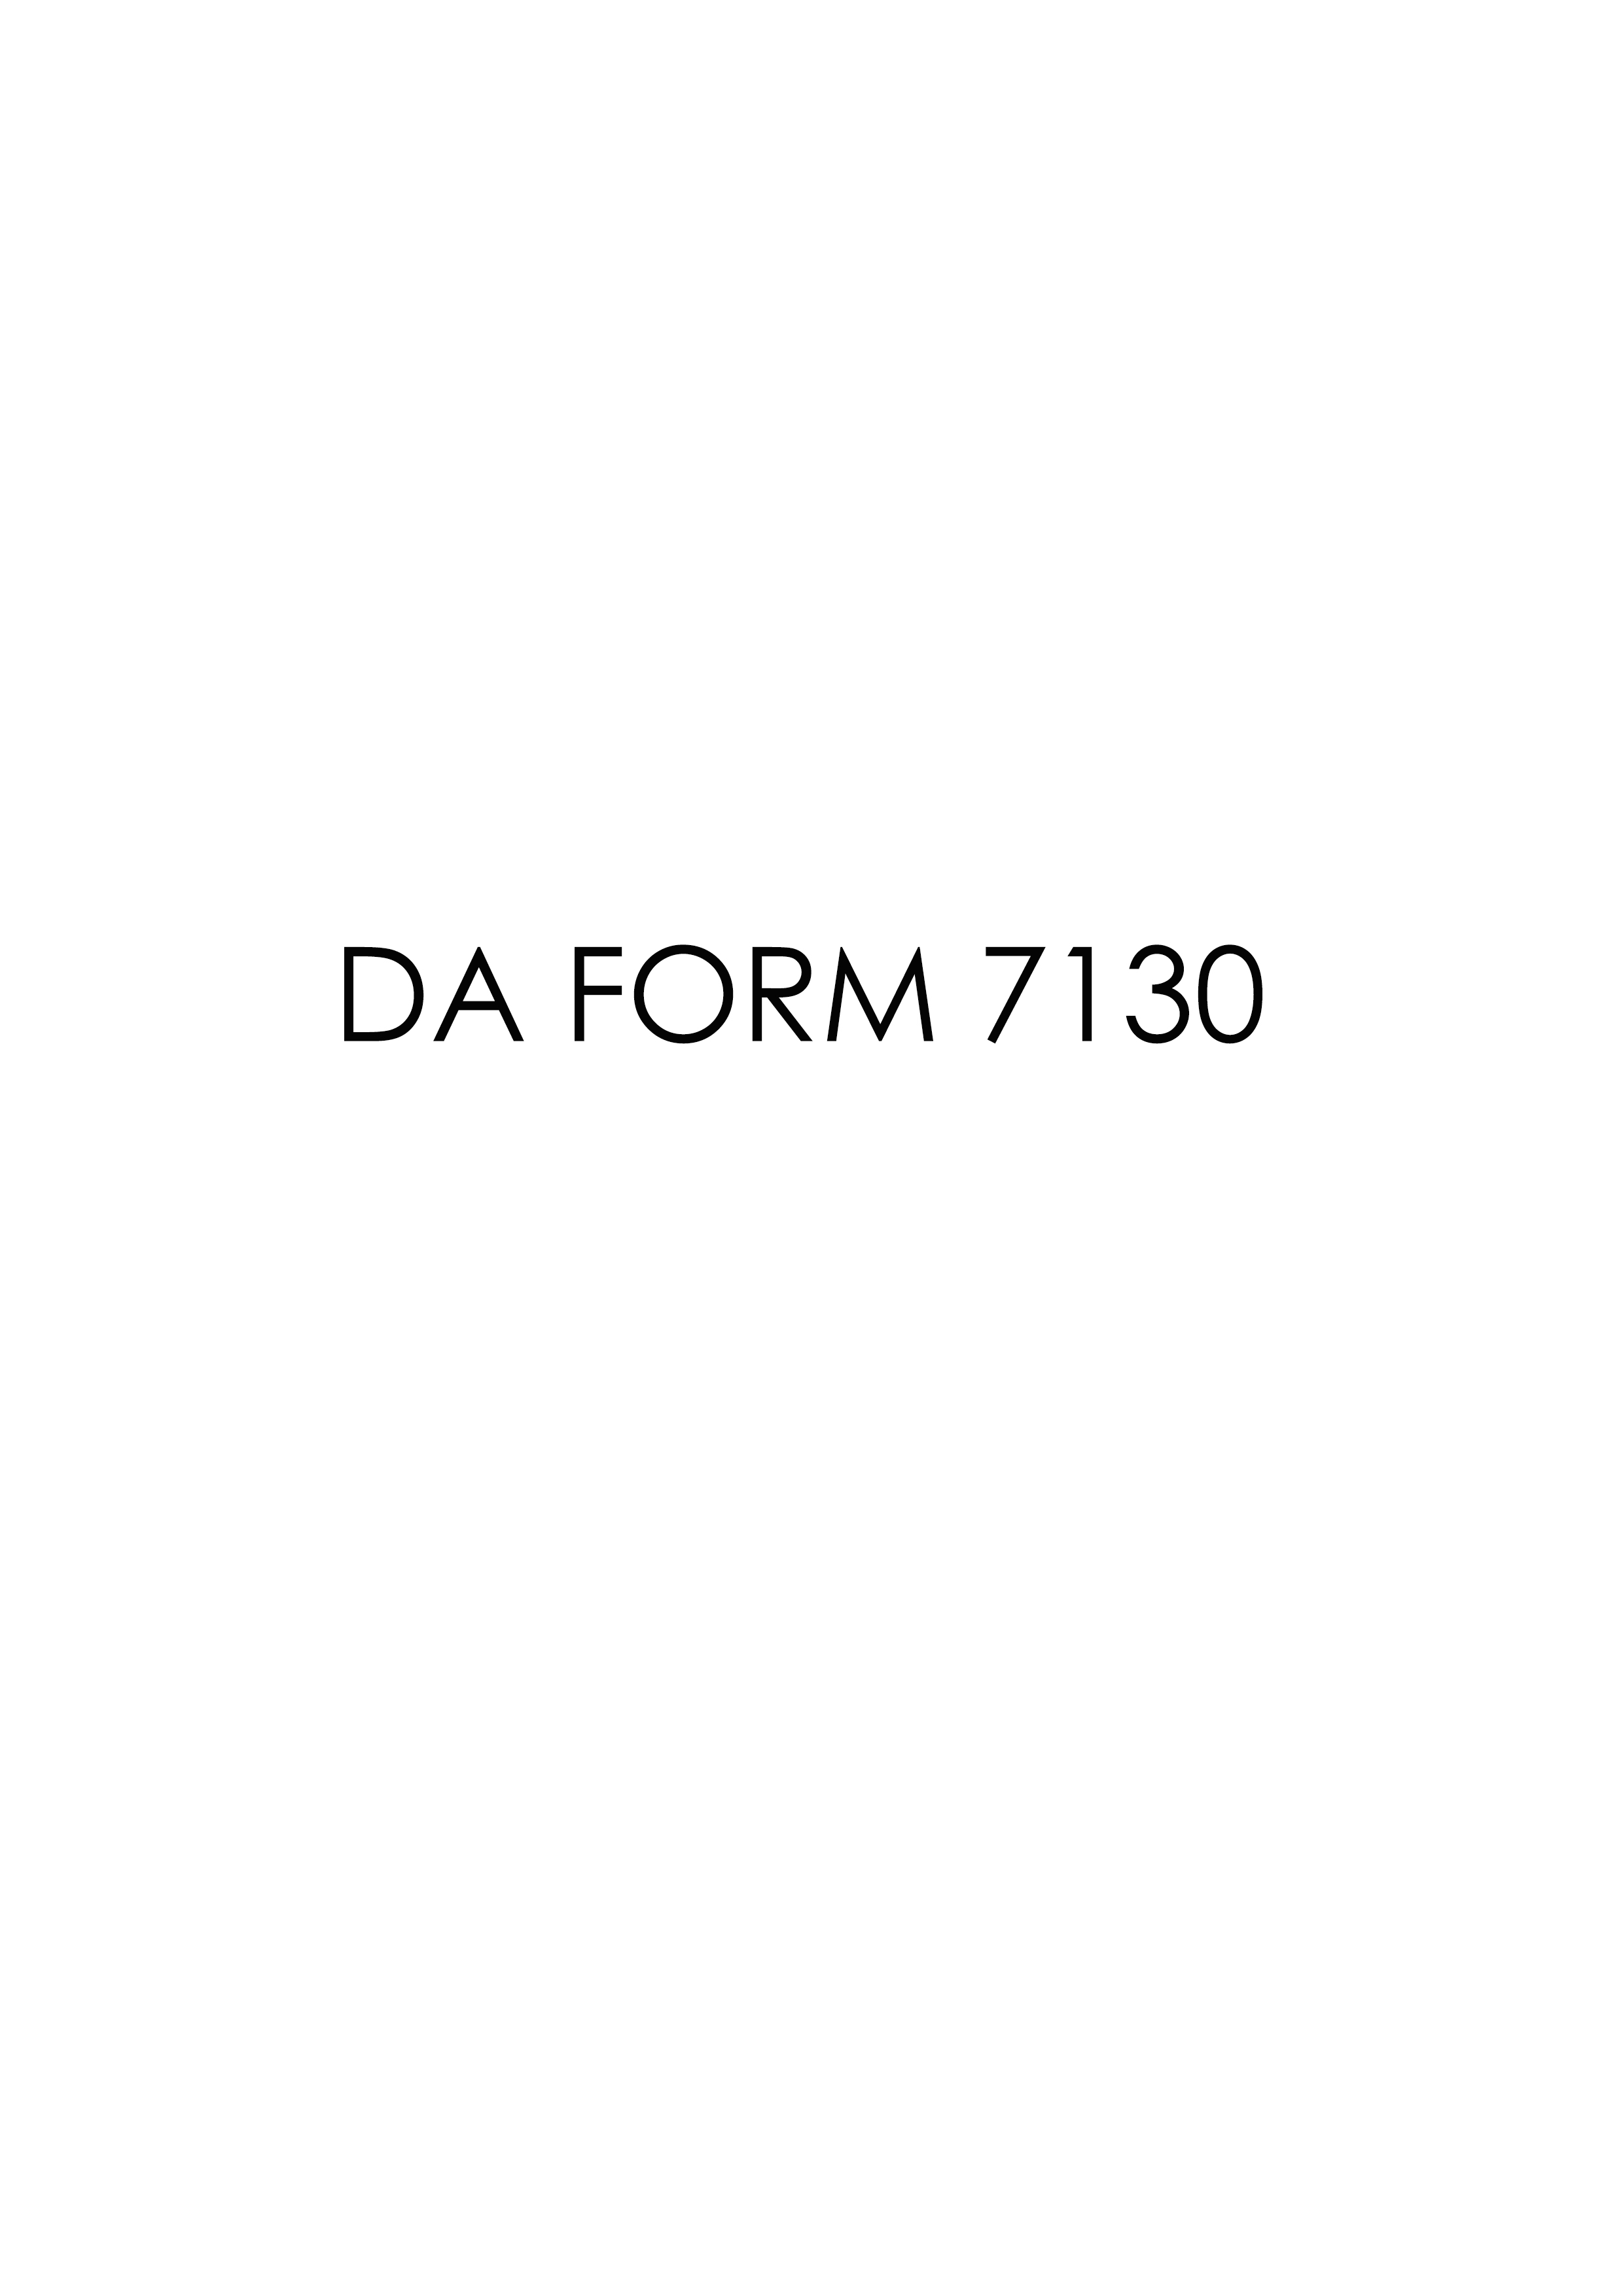 da Form 7130 fillable